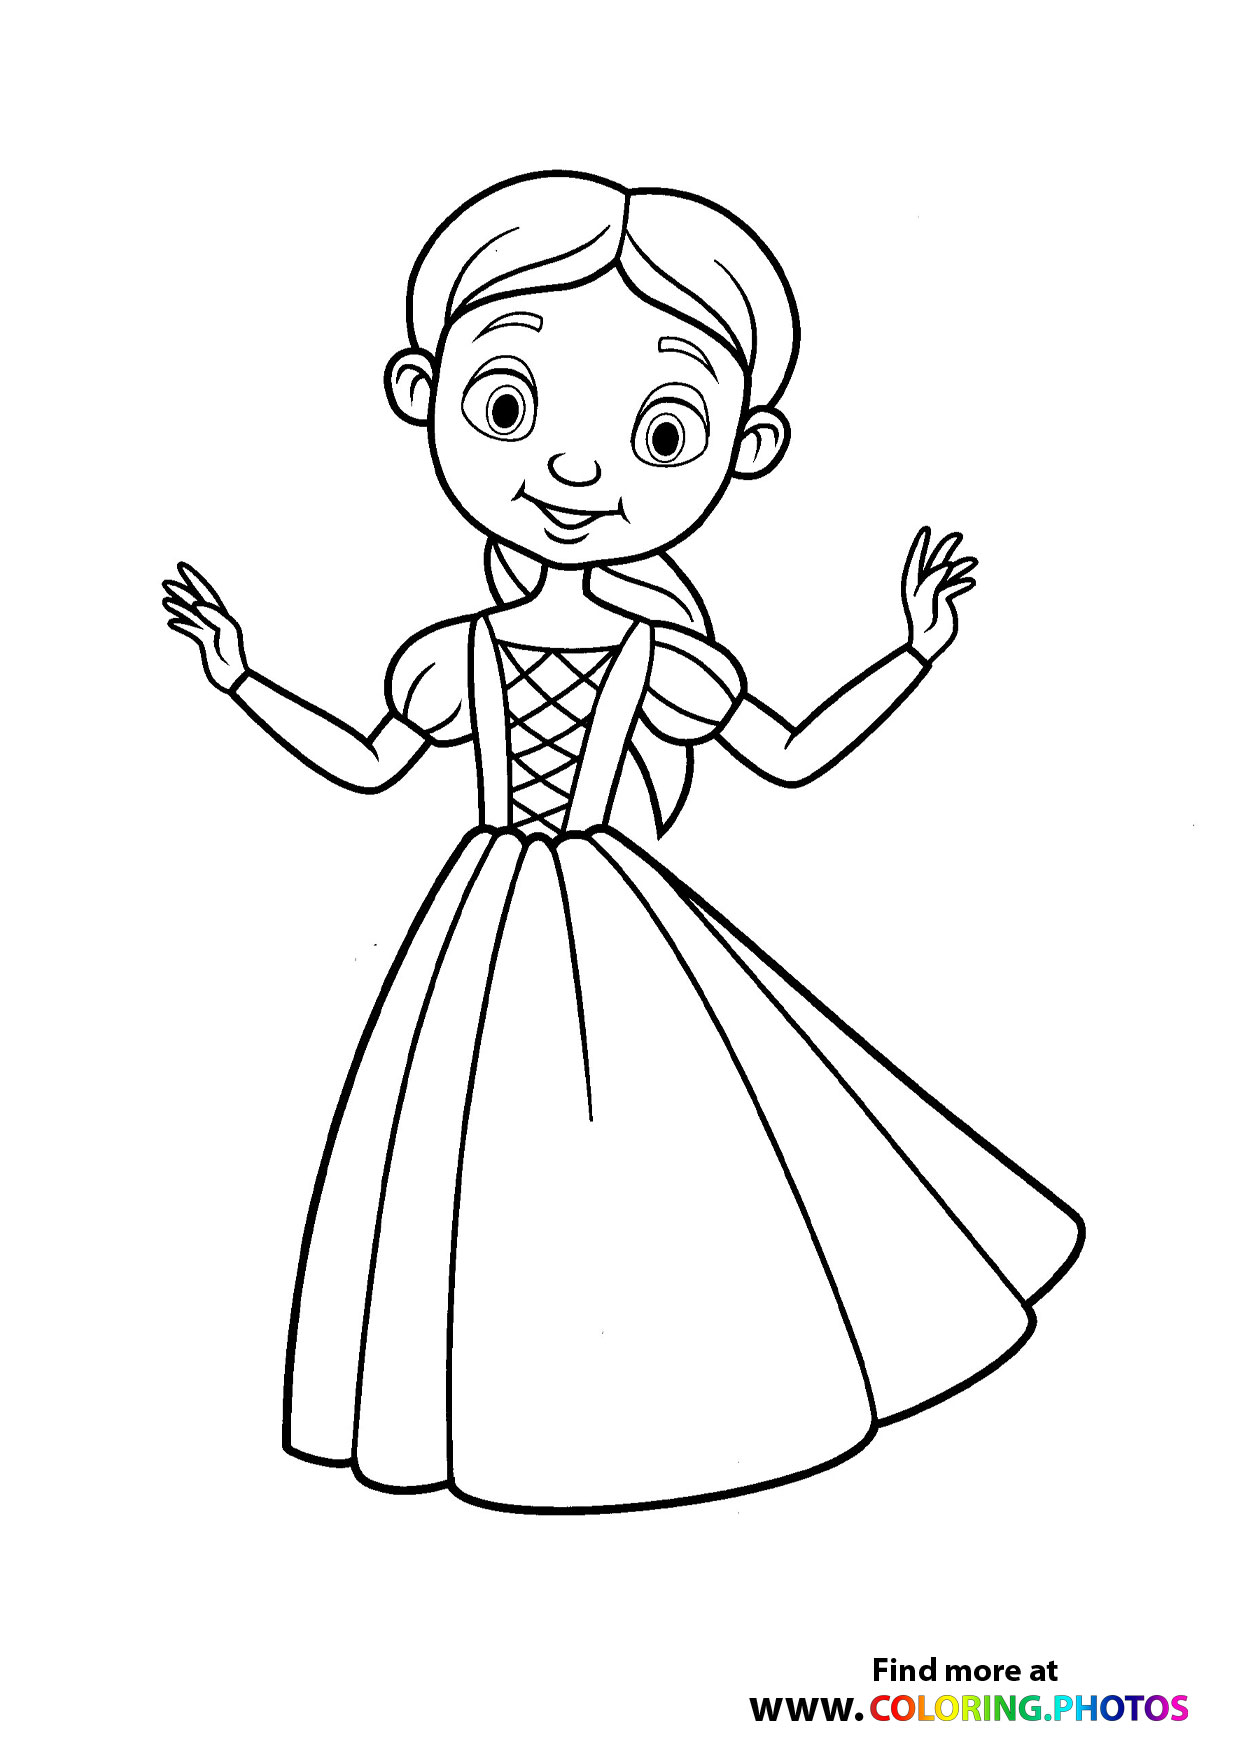 Princess in a dress